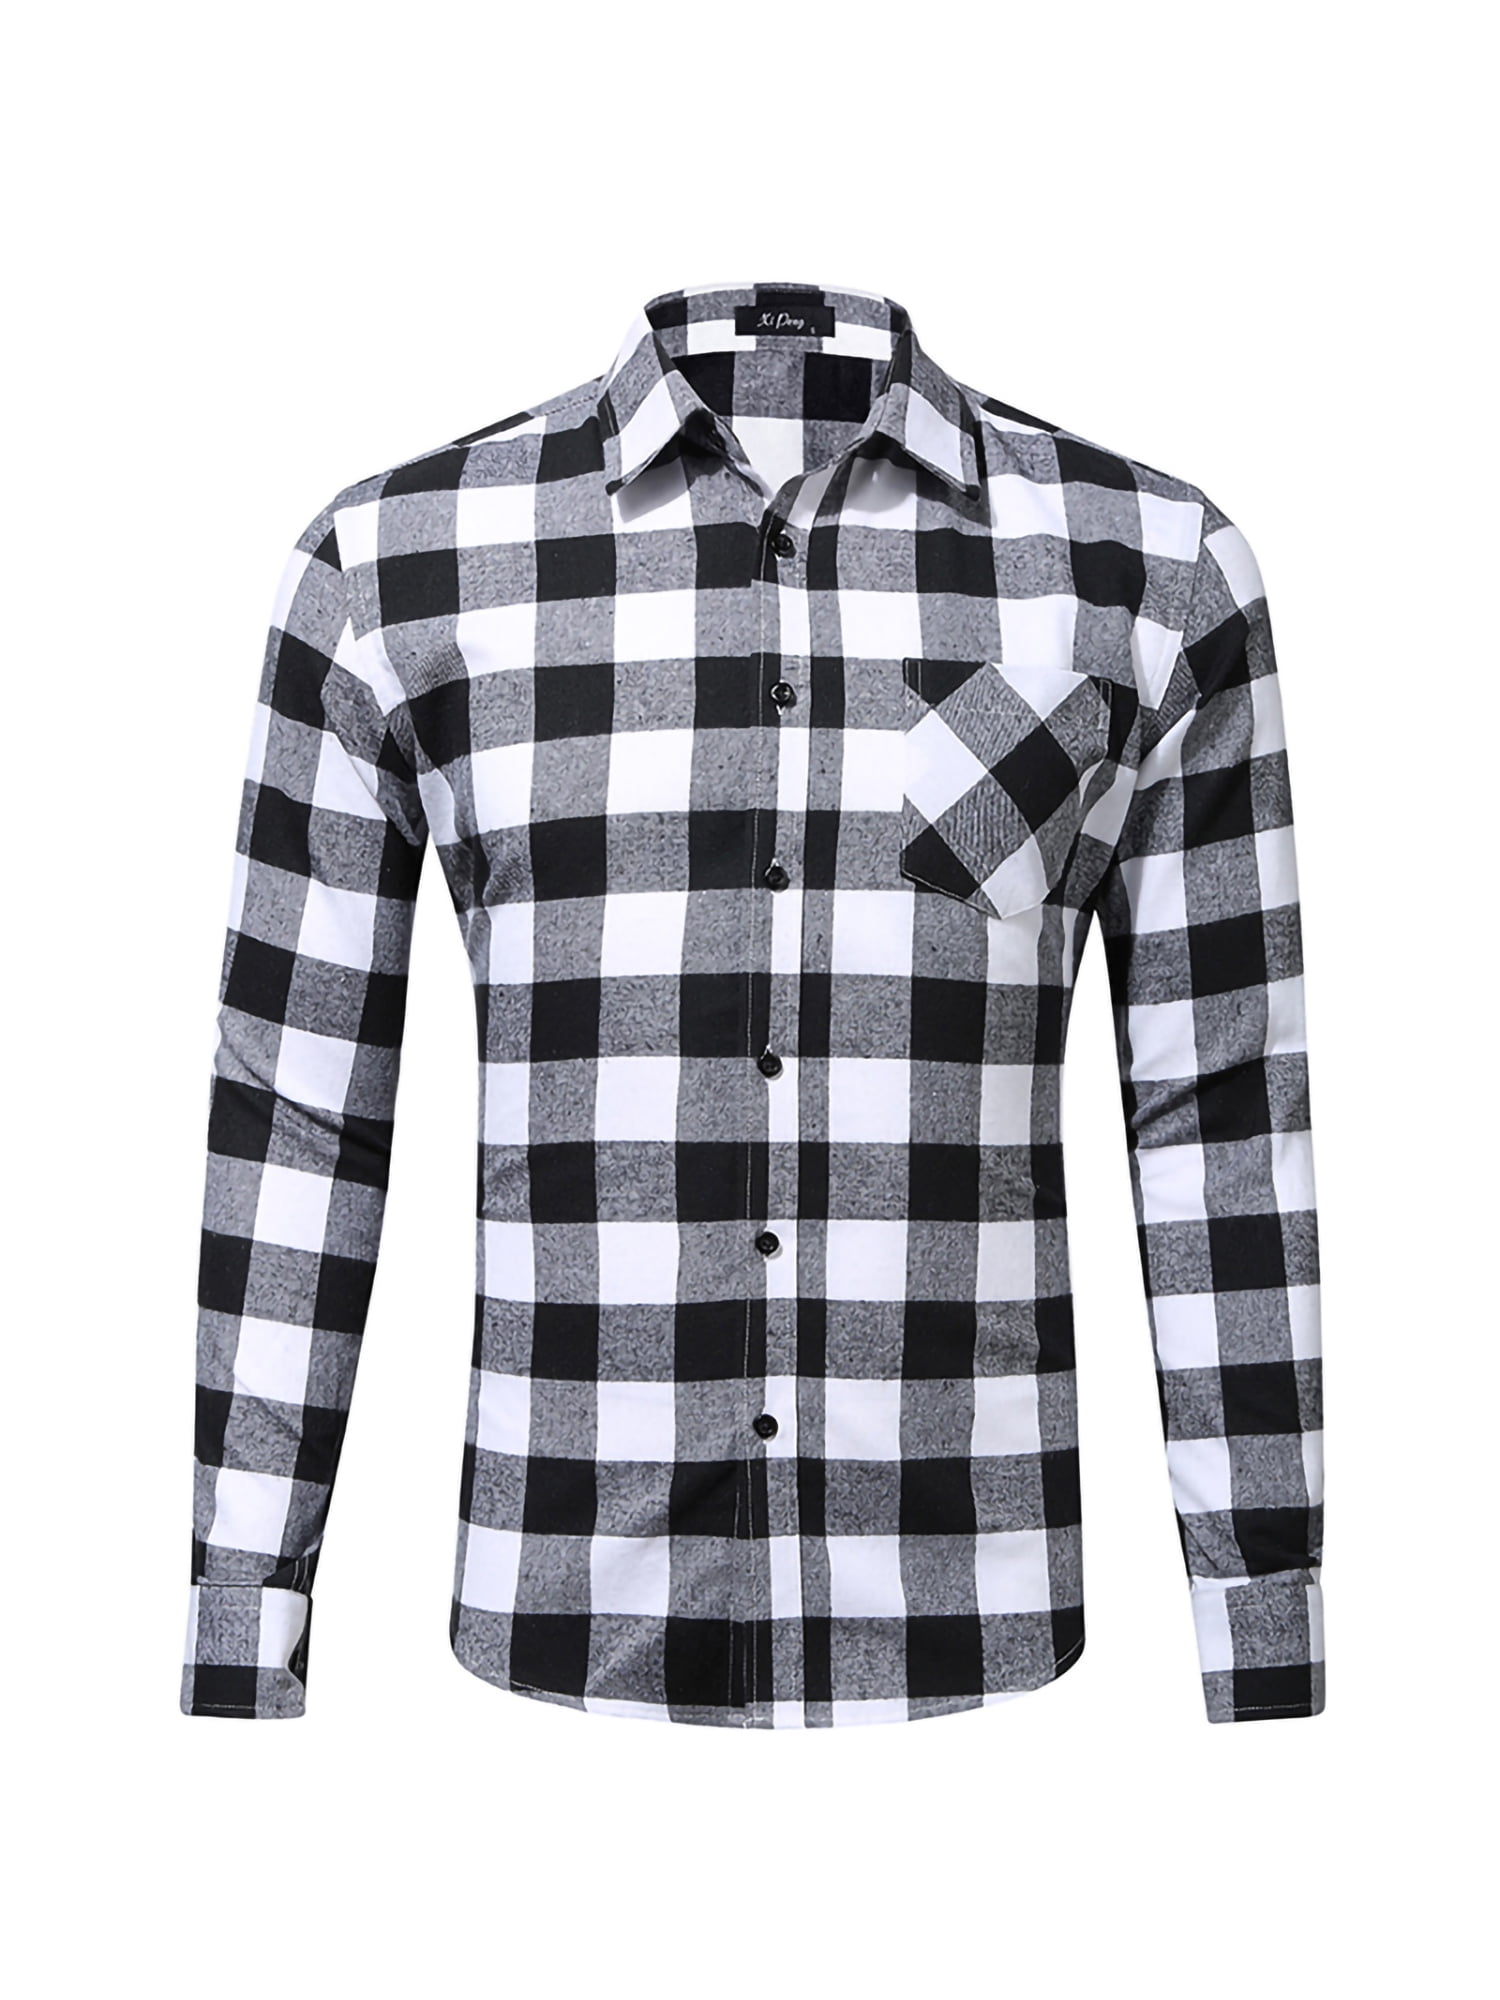 HOT Men'S Long Sleeve Casual Shirts Check Print Cotton Flannel Plaid Shirt Tops